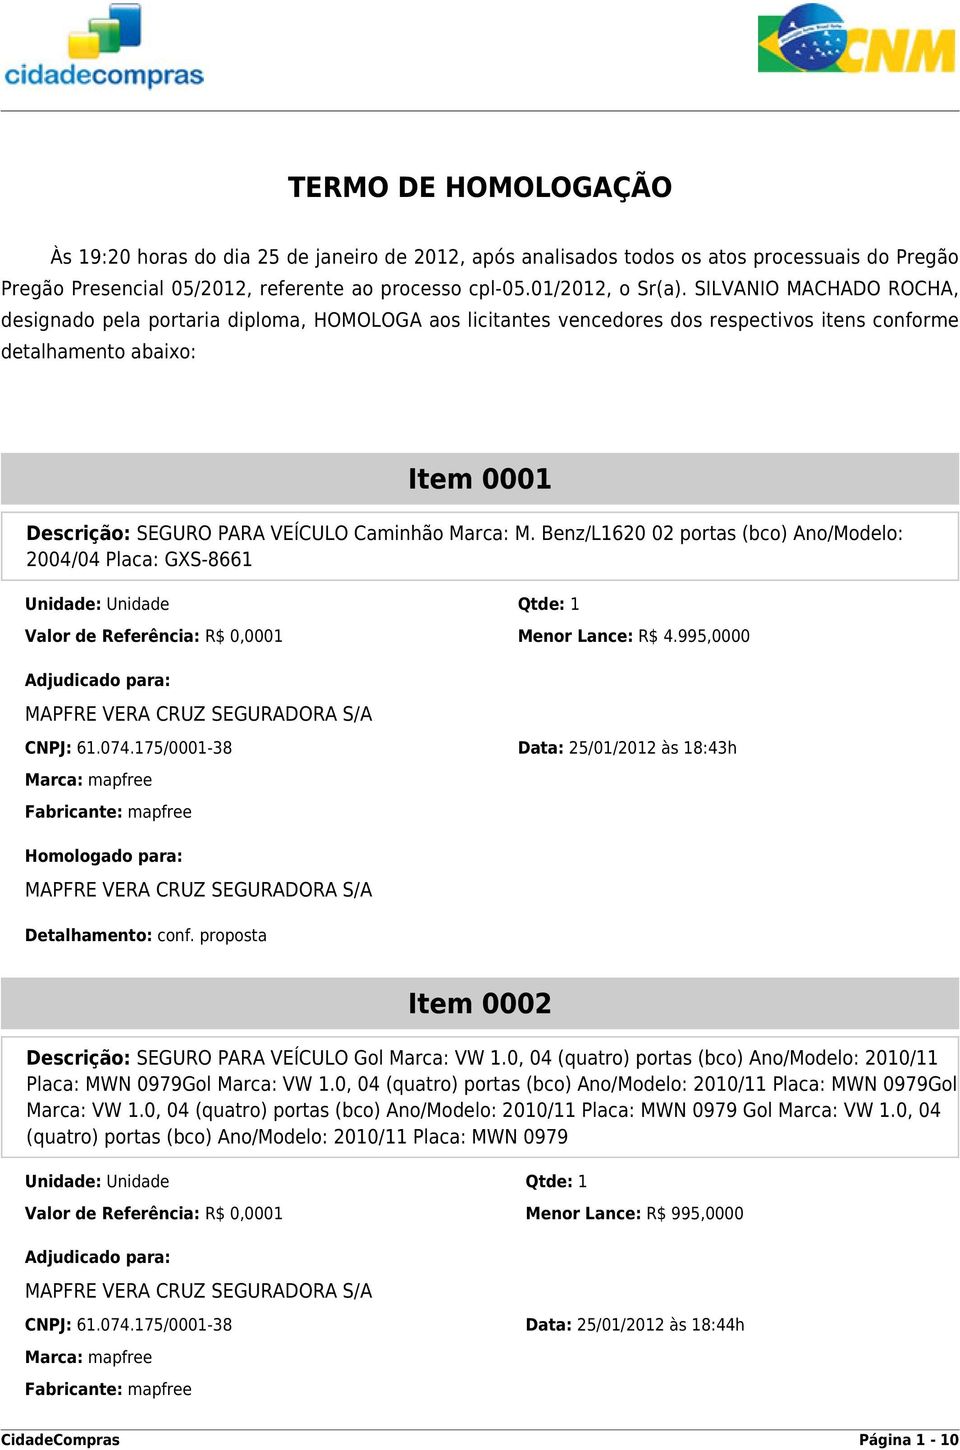 Marca: M. Benz/L1620 02 portas (bco) Ano/Modelo: 2004/04 Placa: GXS-8661 Valor de Referência: R$ 0,0001 Menor Lance: R$ 4.995,0000 CNPJ: 61.074.